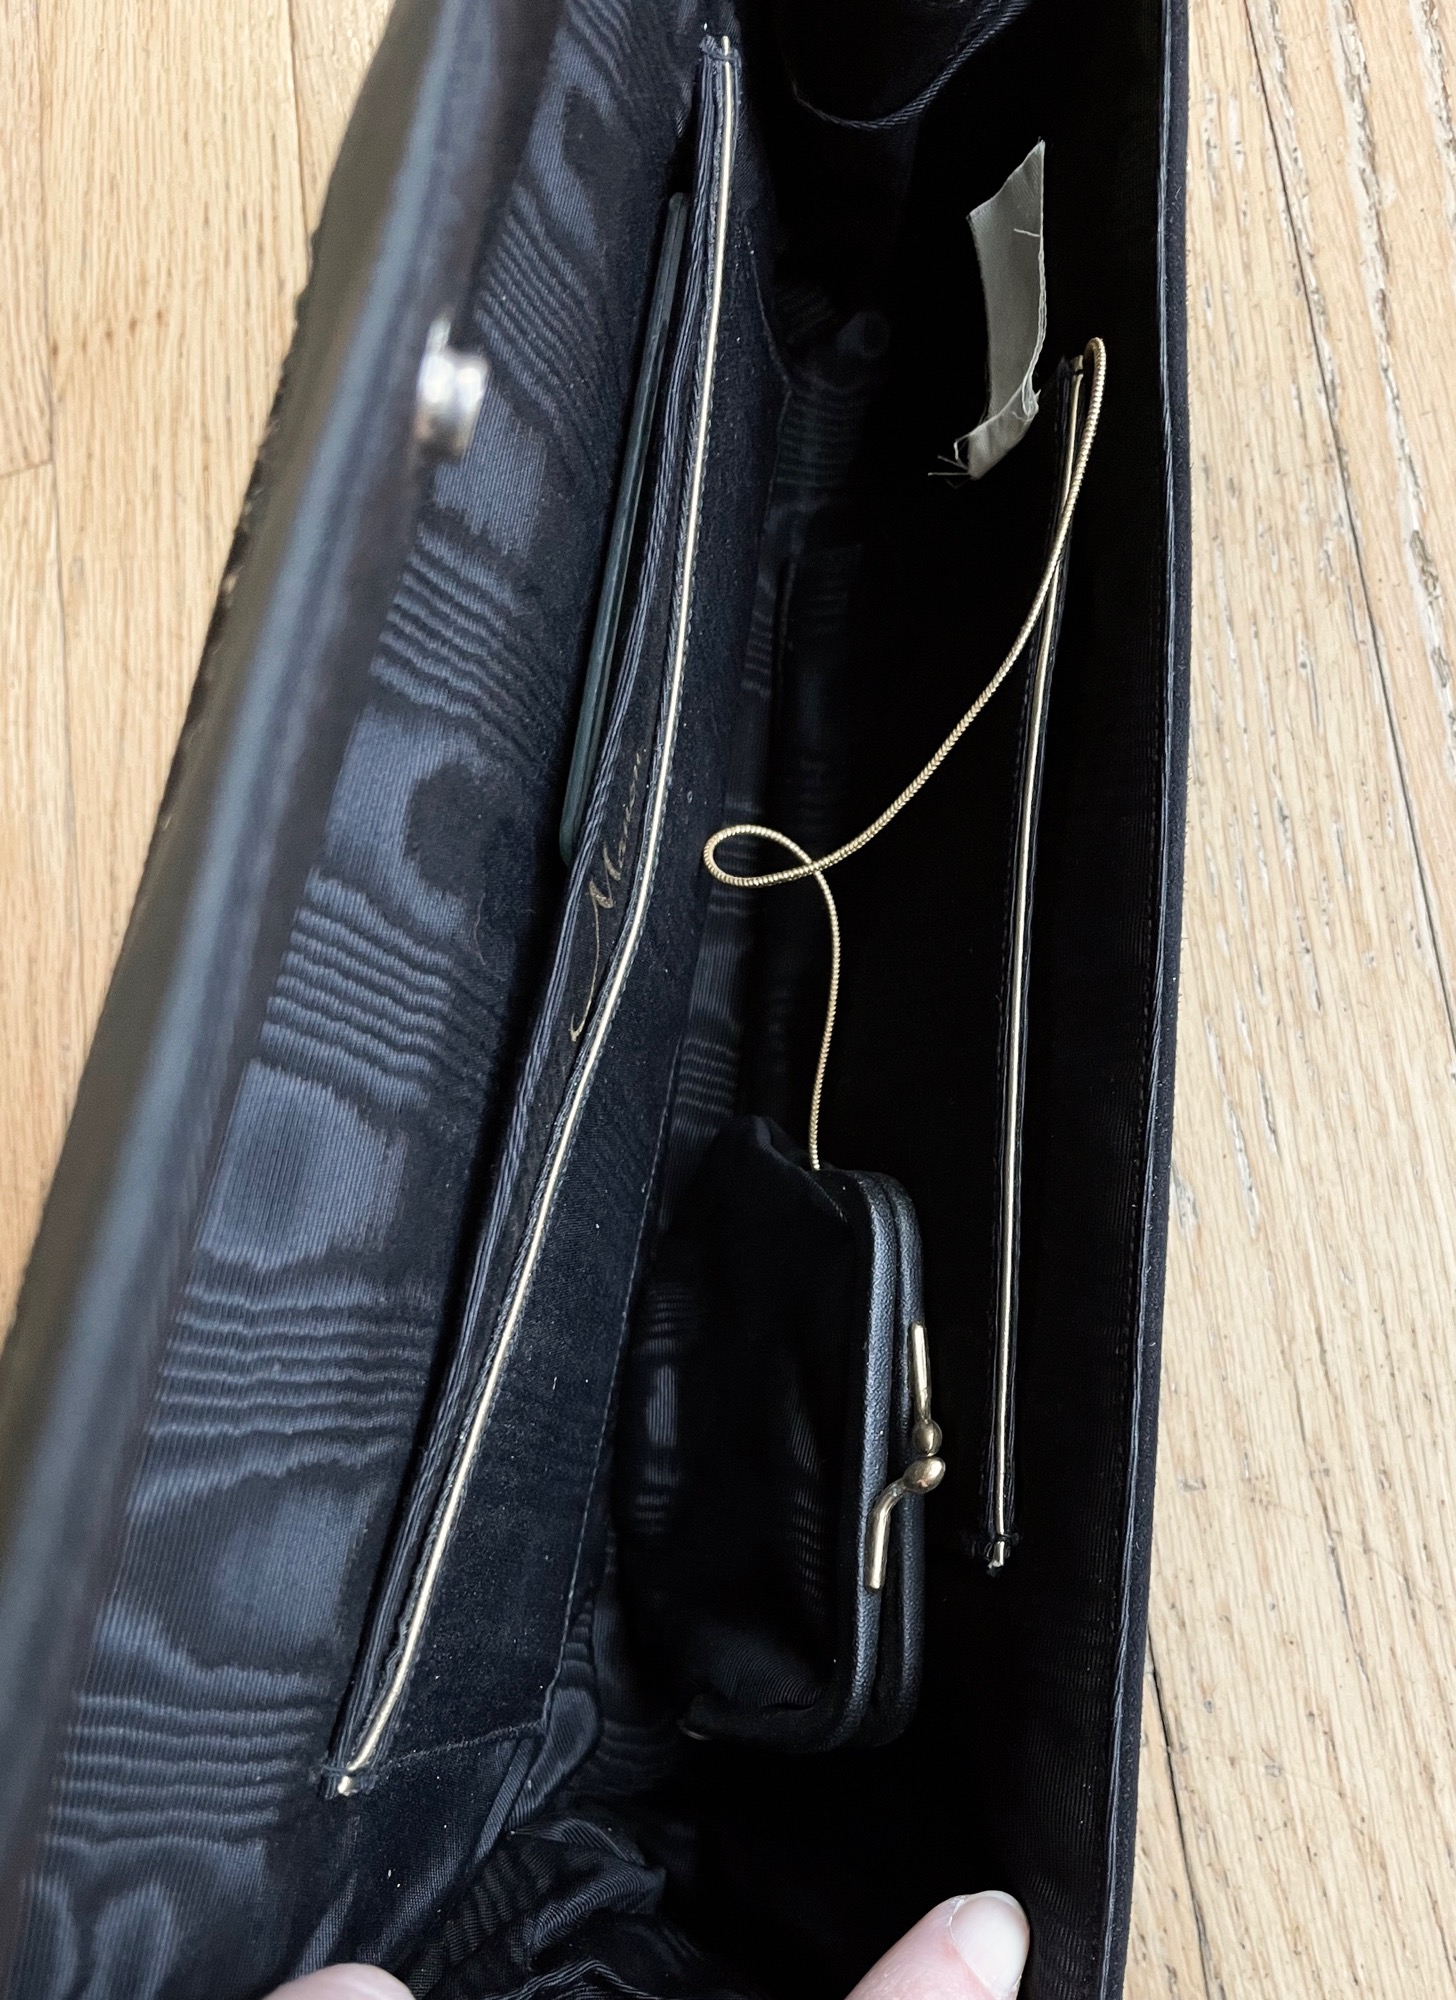 Urban Gypsy Design Oxford Clutch Handbag in Peony Print and Restoration Black Color, Artisan Designer Handbags